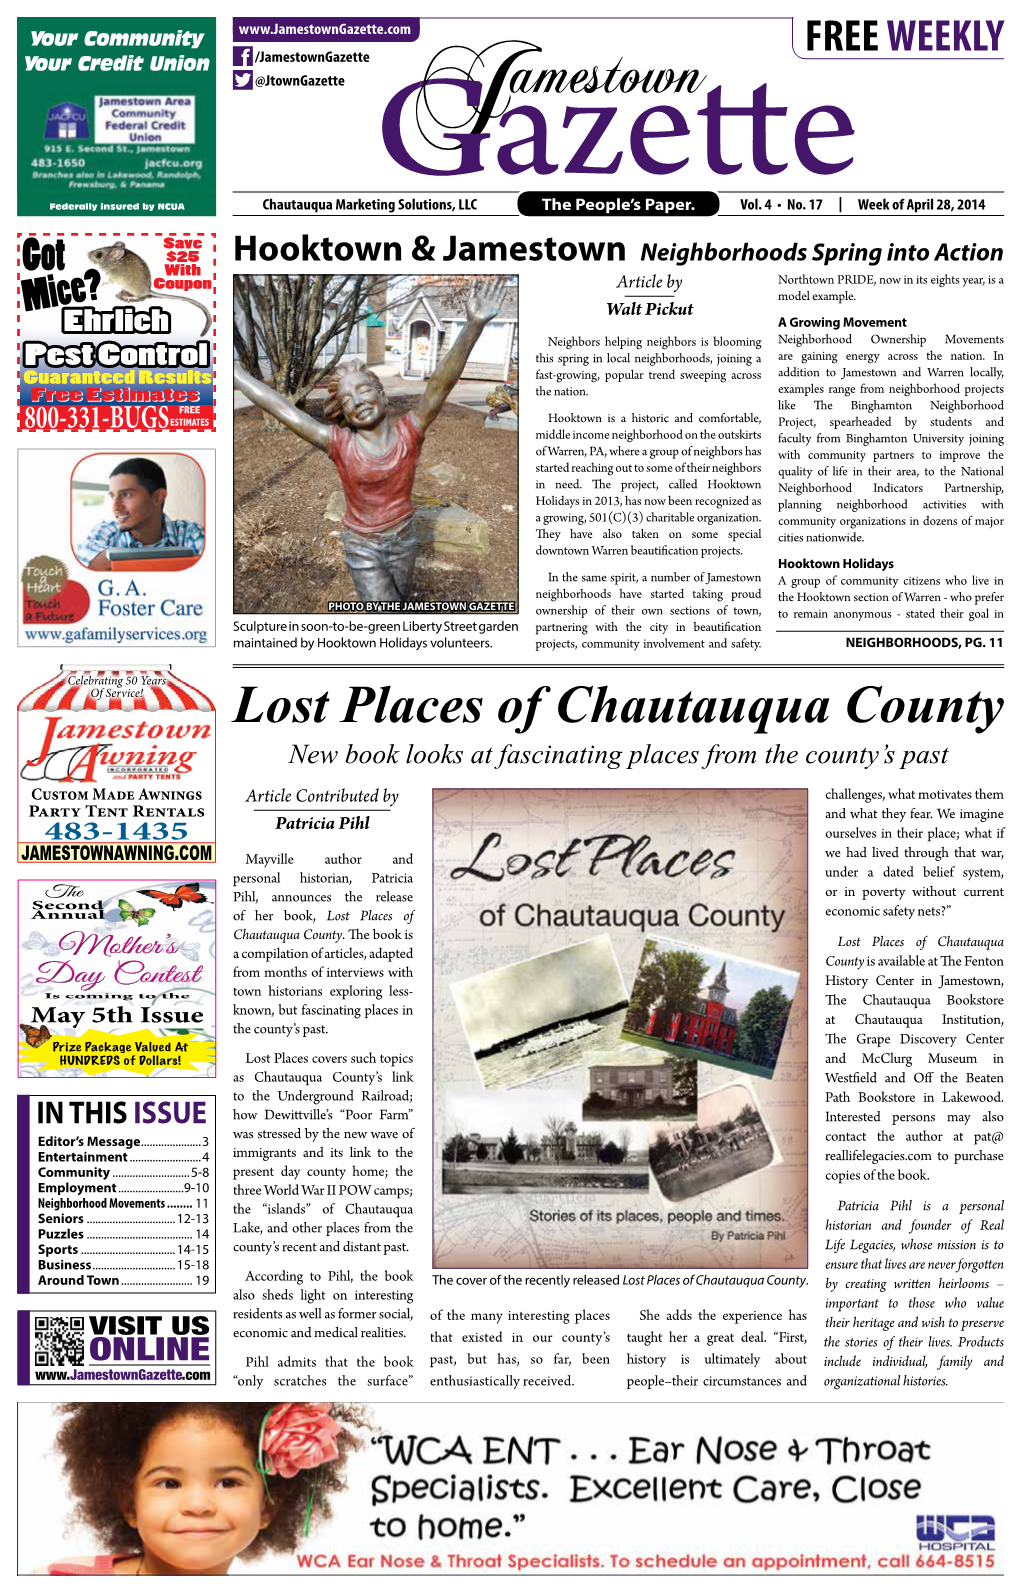 Lost Places of Chautauqua County